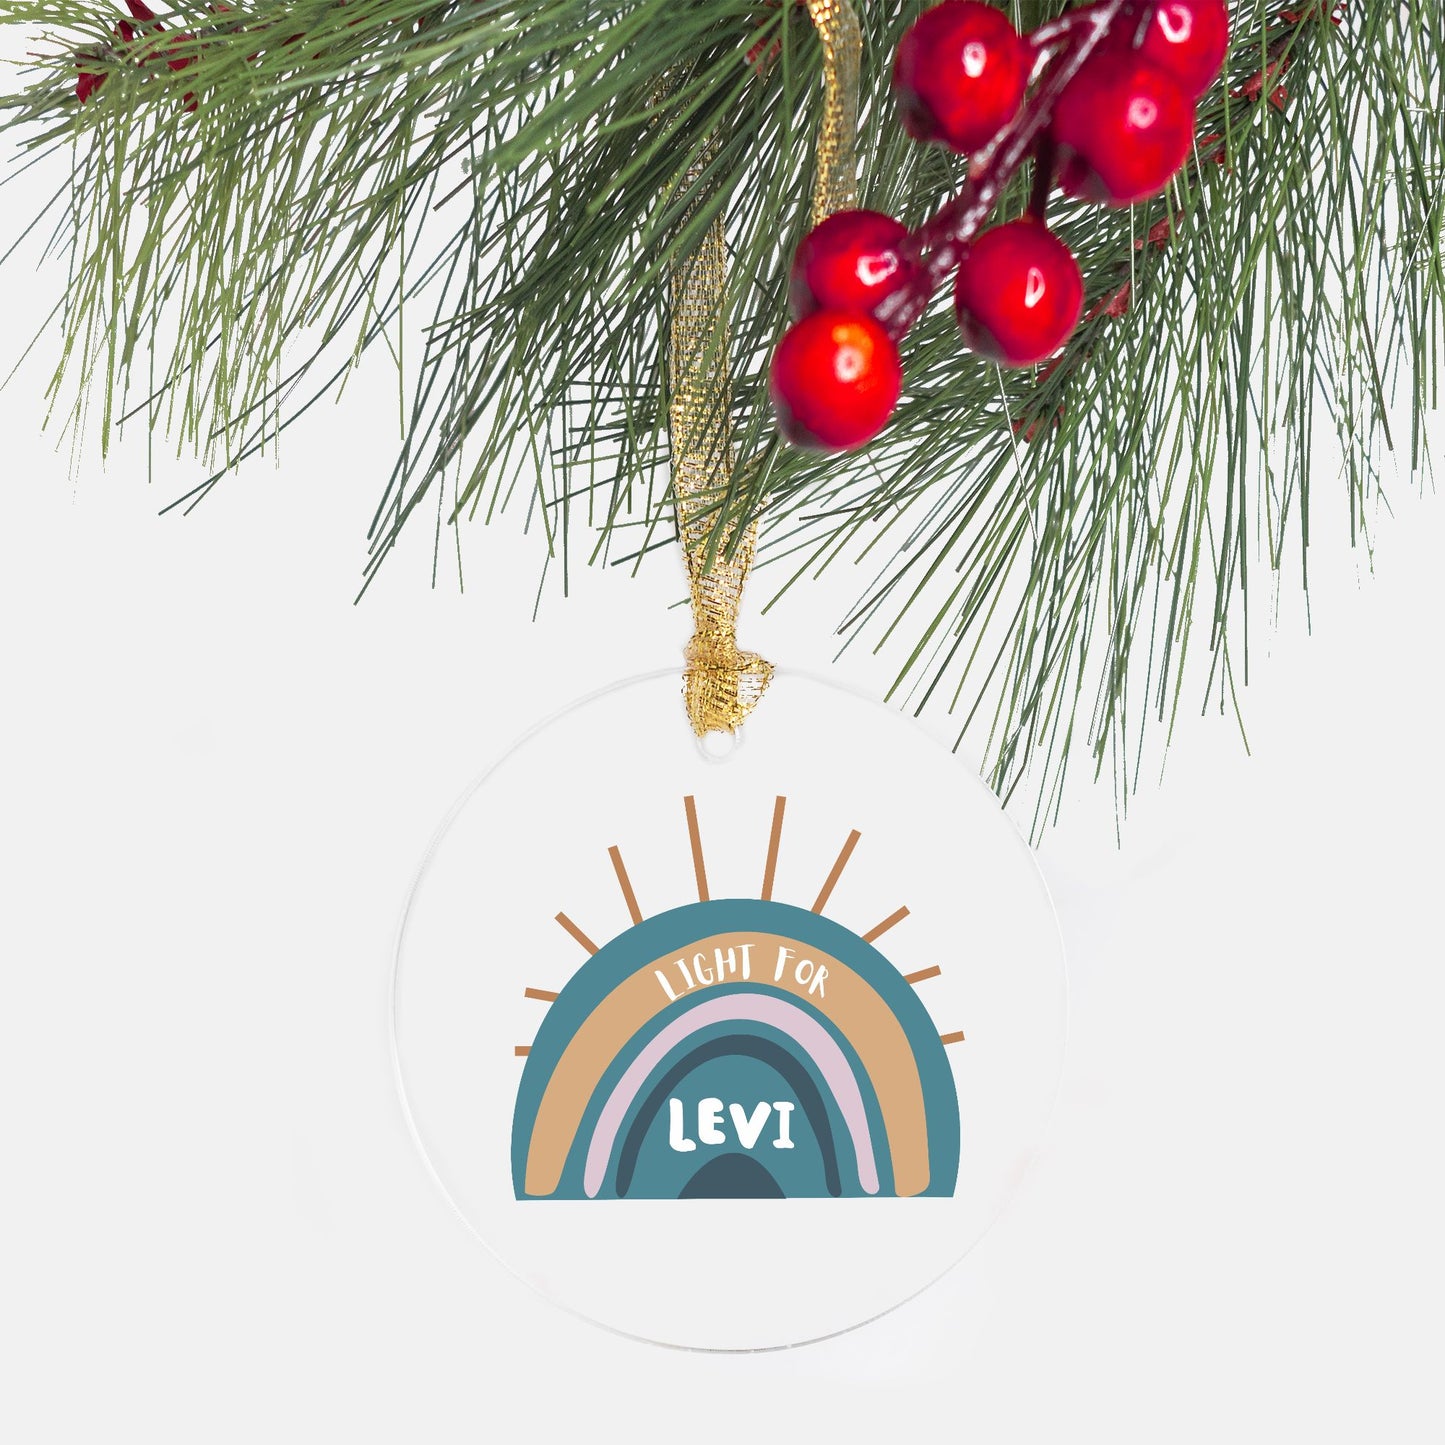 Light For Levi — Acrylic Ornament